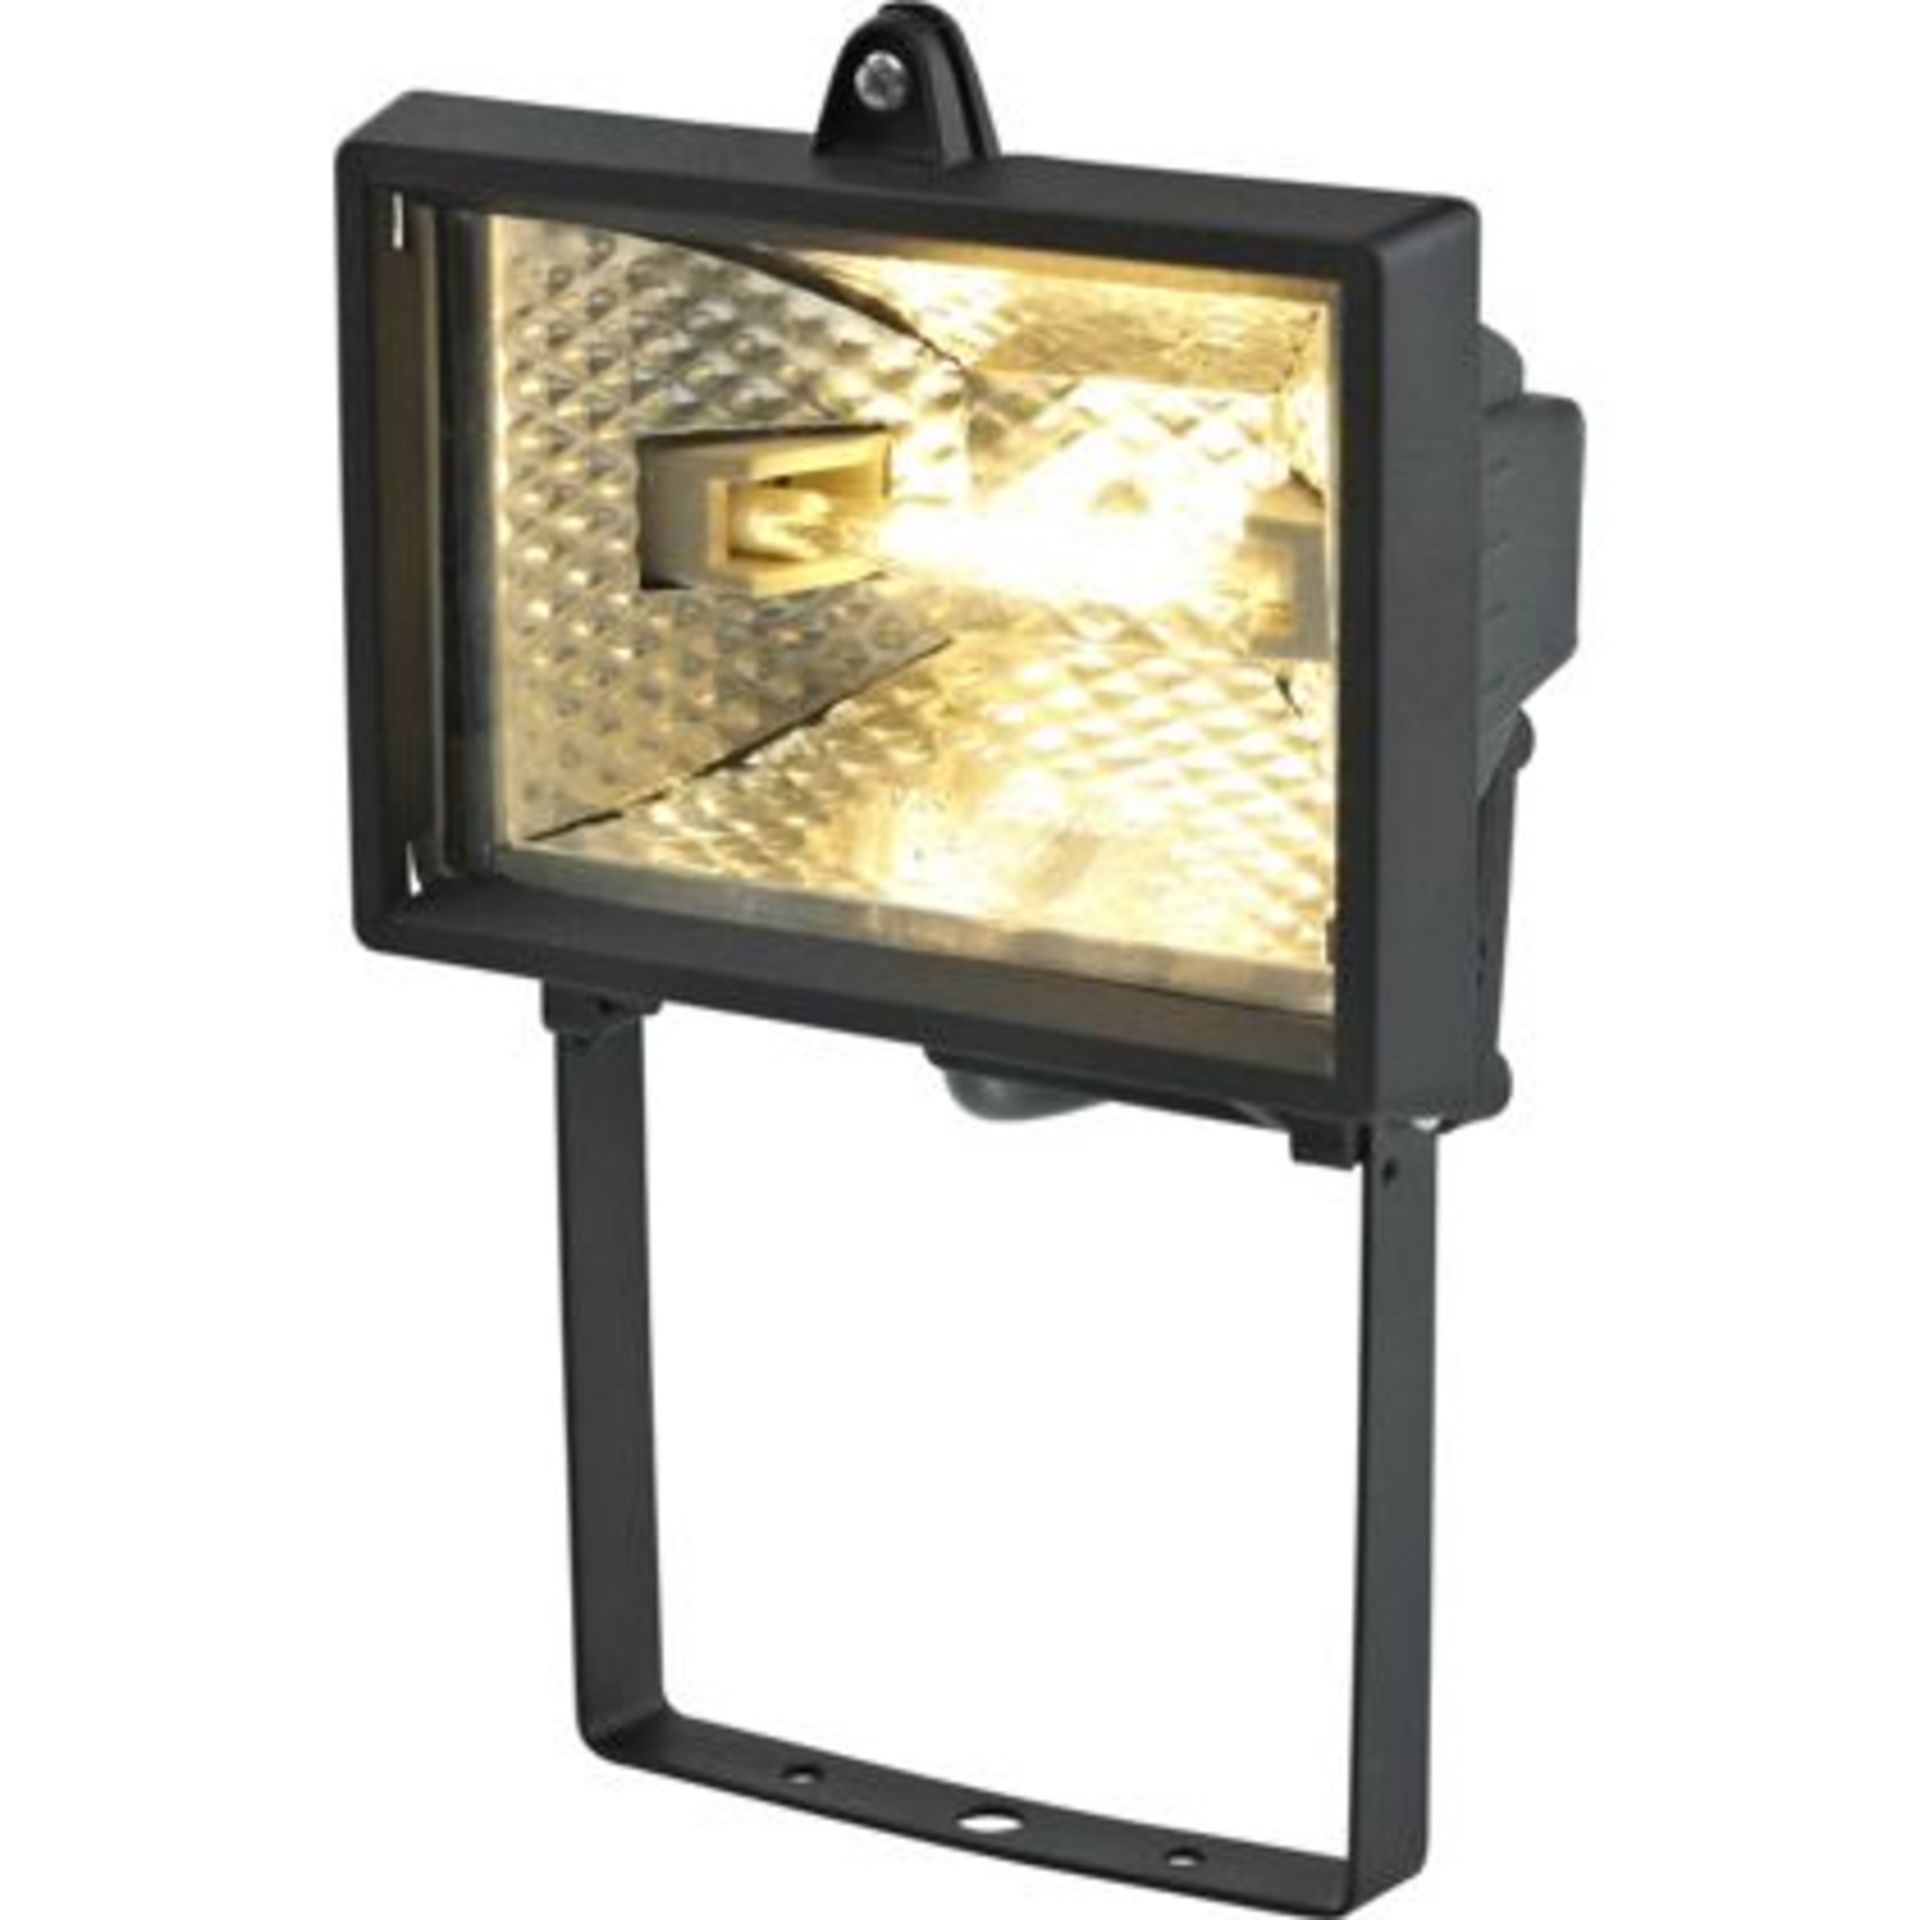 (G180) 3 x 120w Aluminium Outdoor Floodlights - Black. 120W Floodlight is an ideal way to light your